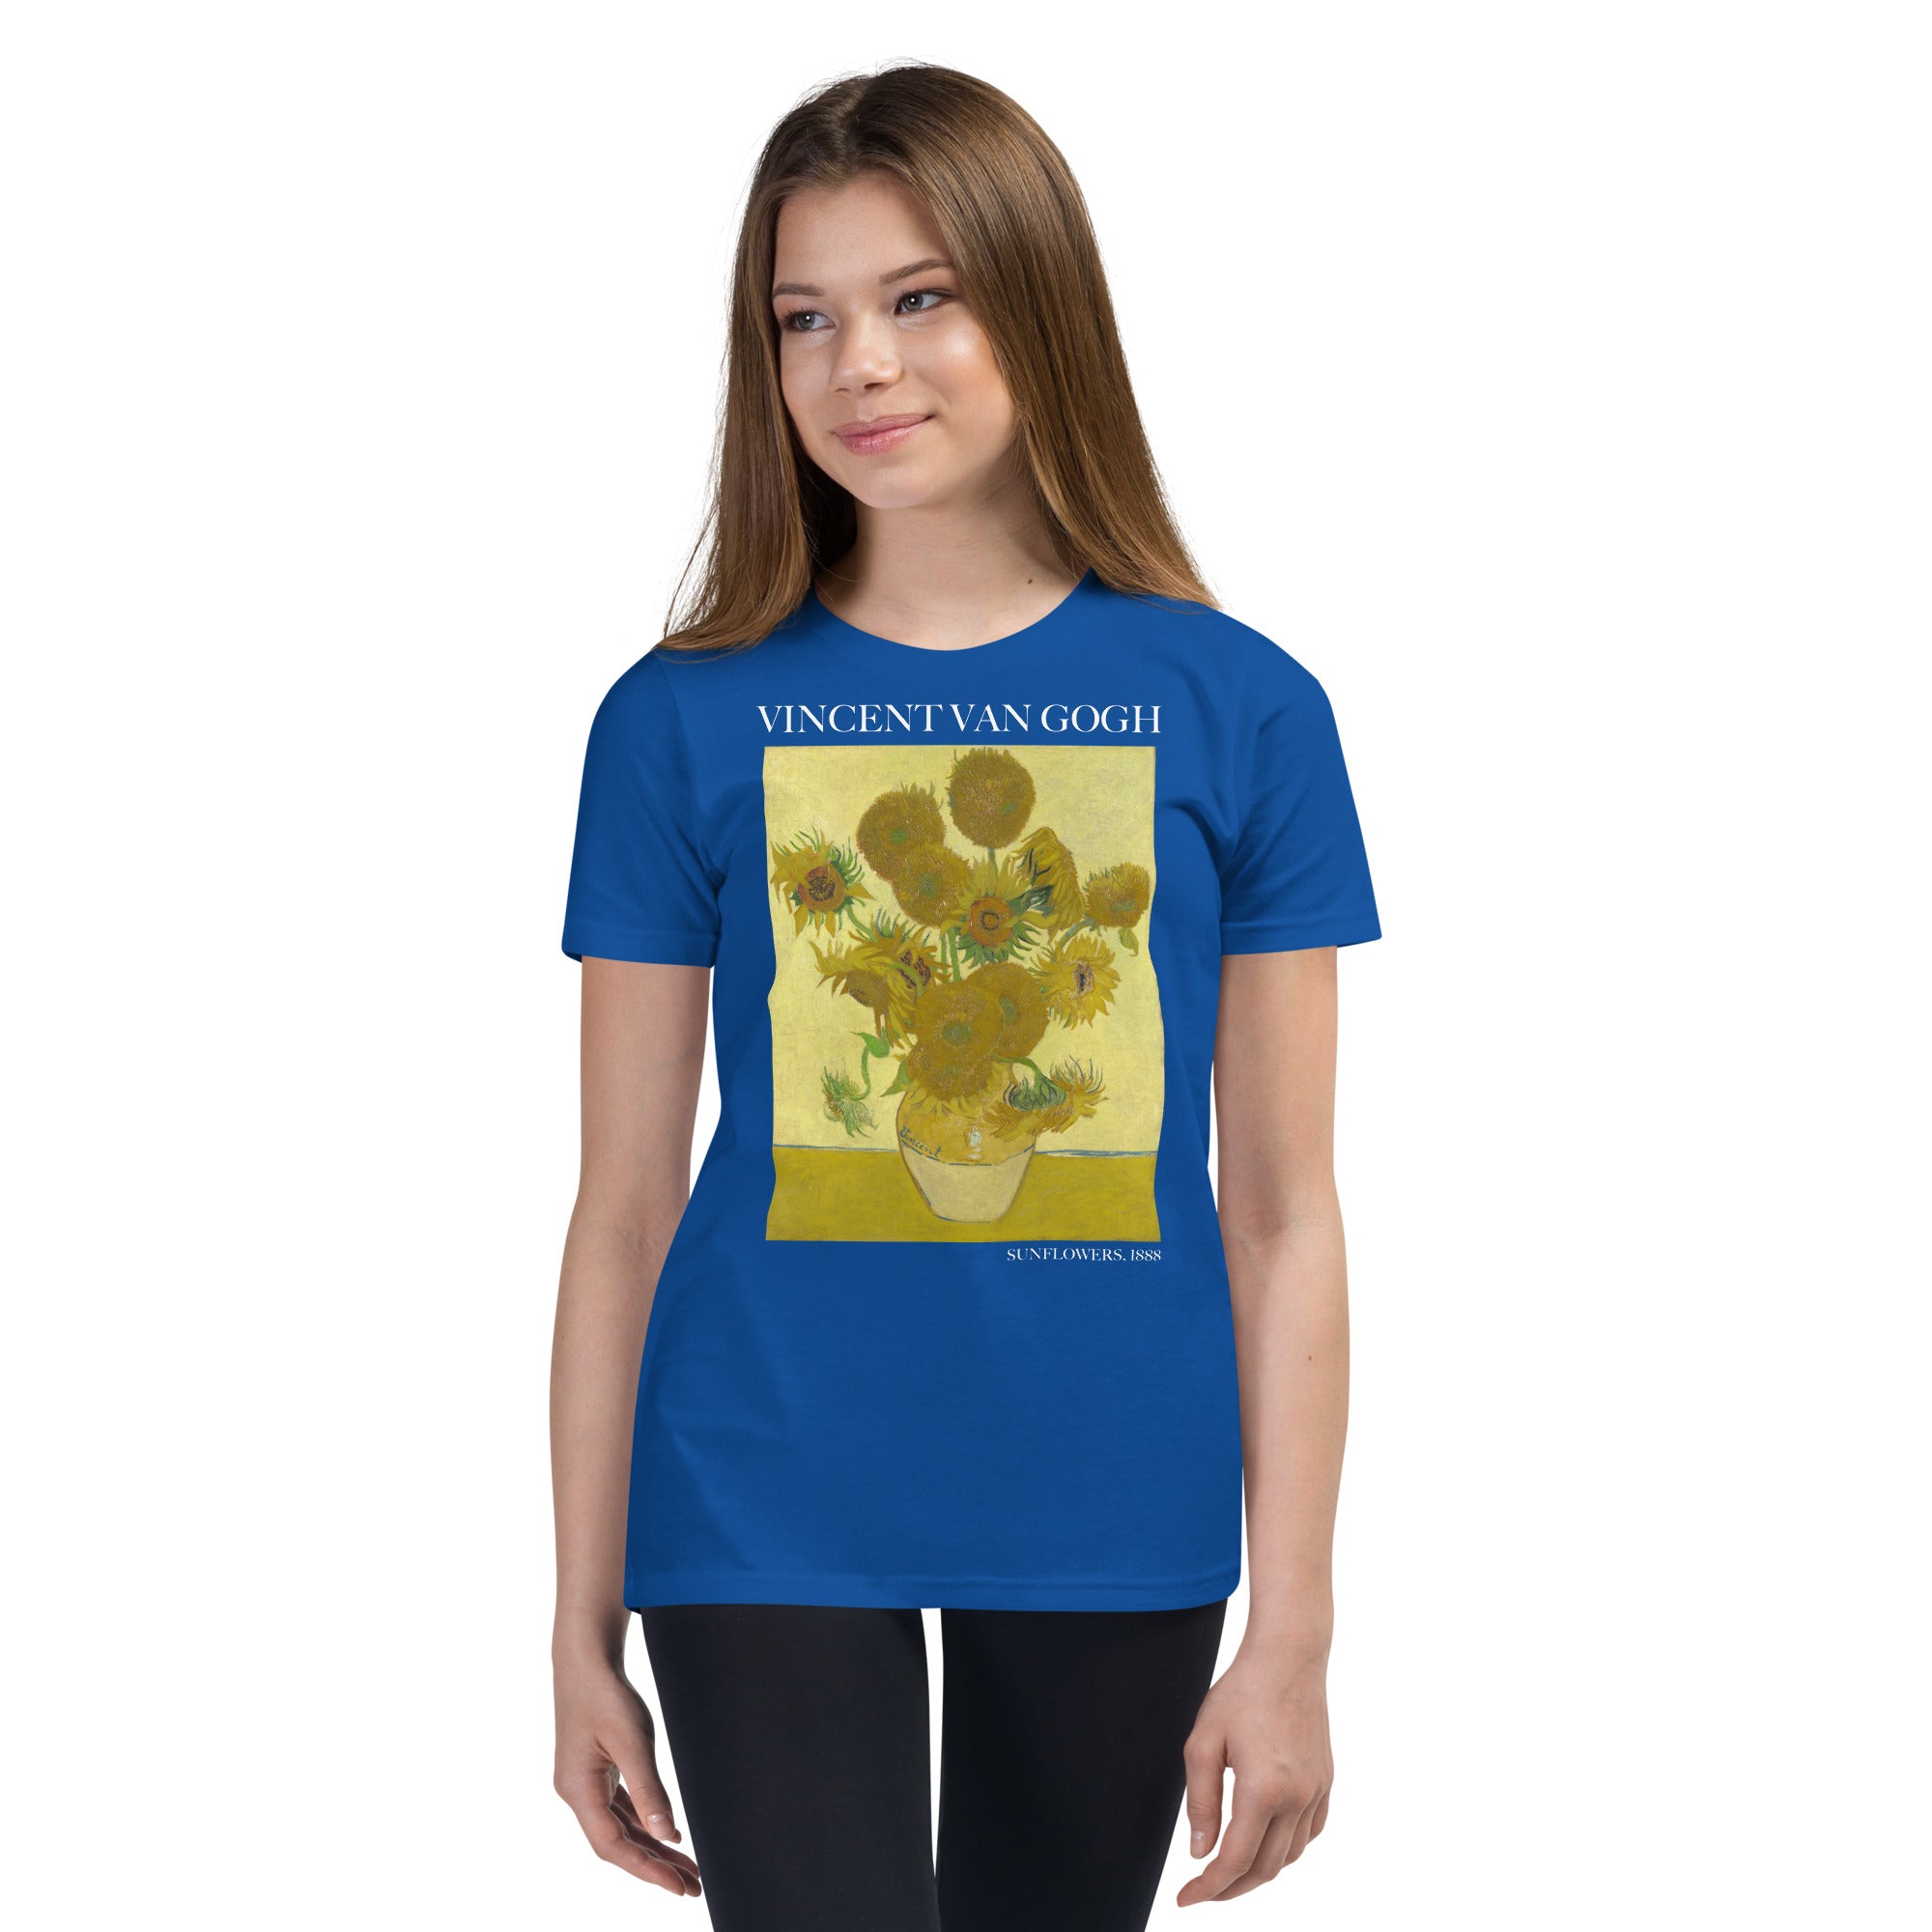 Vincent van Gogh 'Sunflowers' Famous Painting Short Sleeve T-Shirt | Premium Youth Art Tee